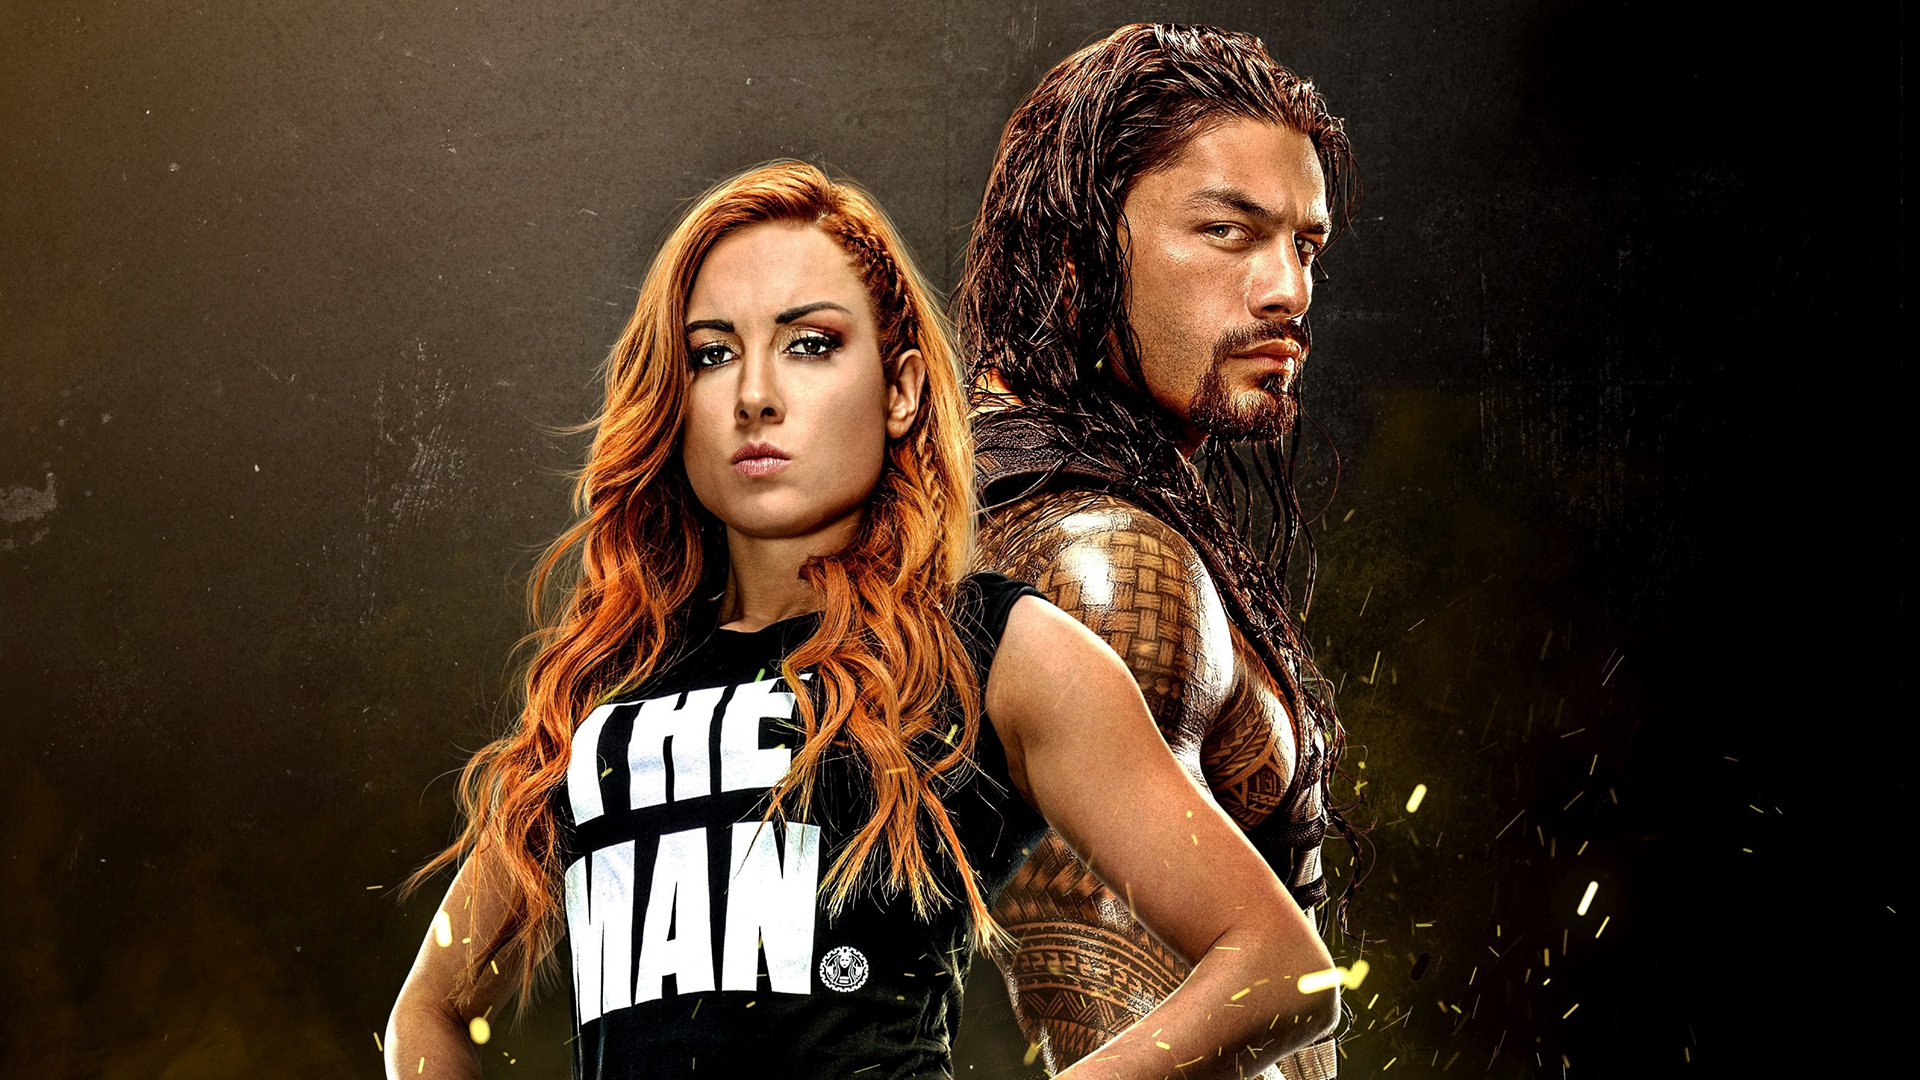 Wallpaper of Becky Lynch, Roman Reigns, WWE 2K20 background